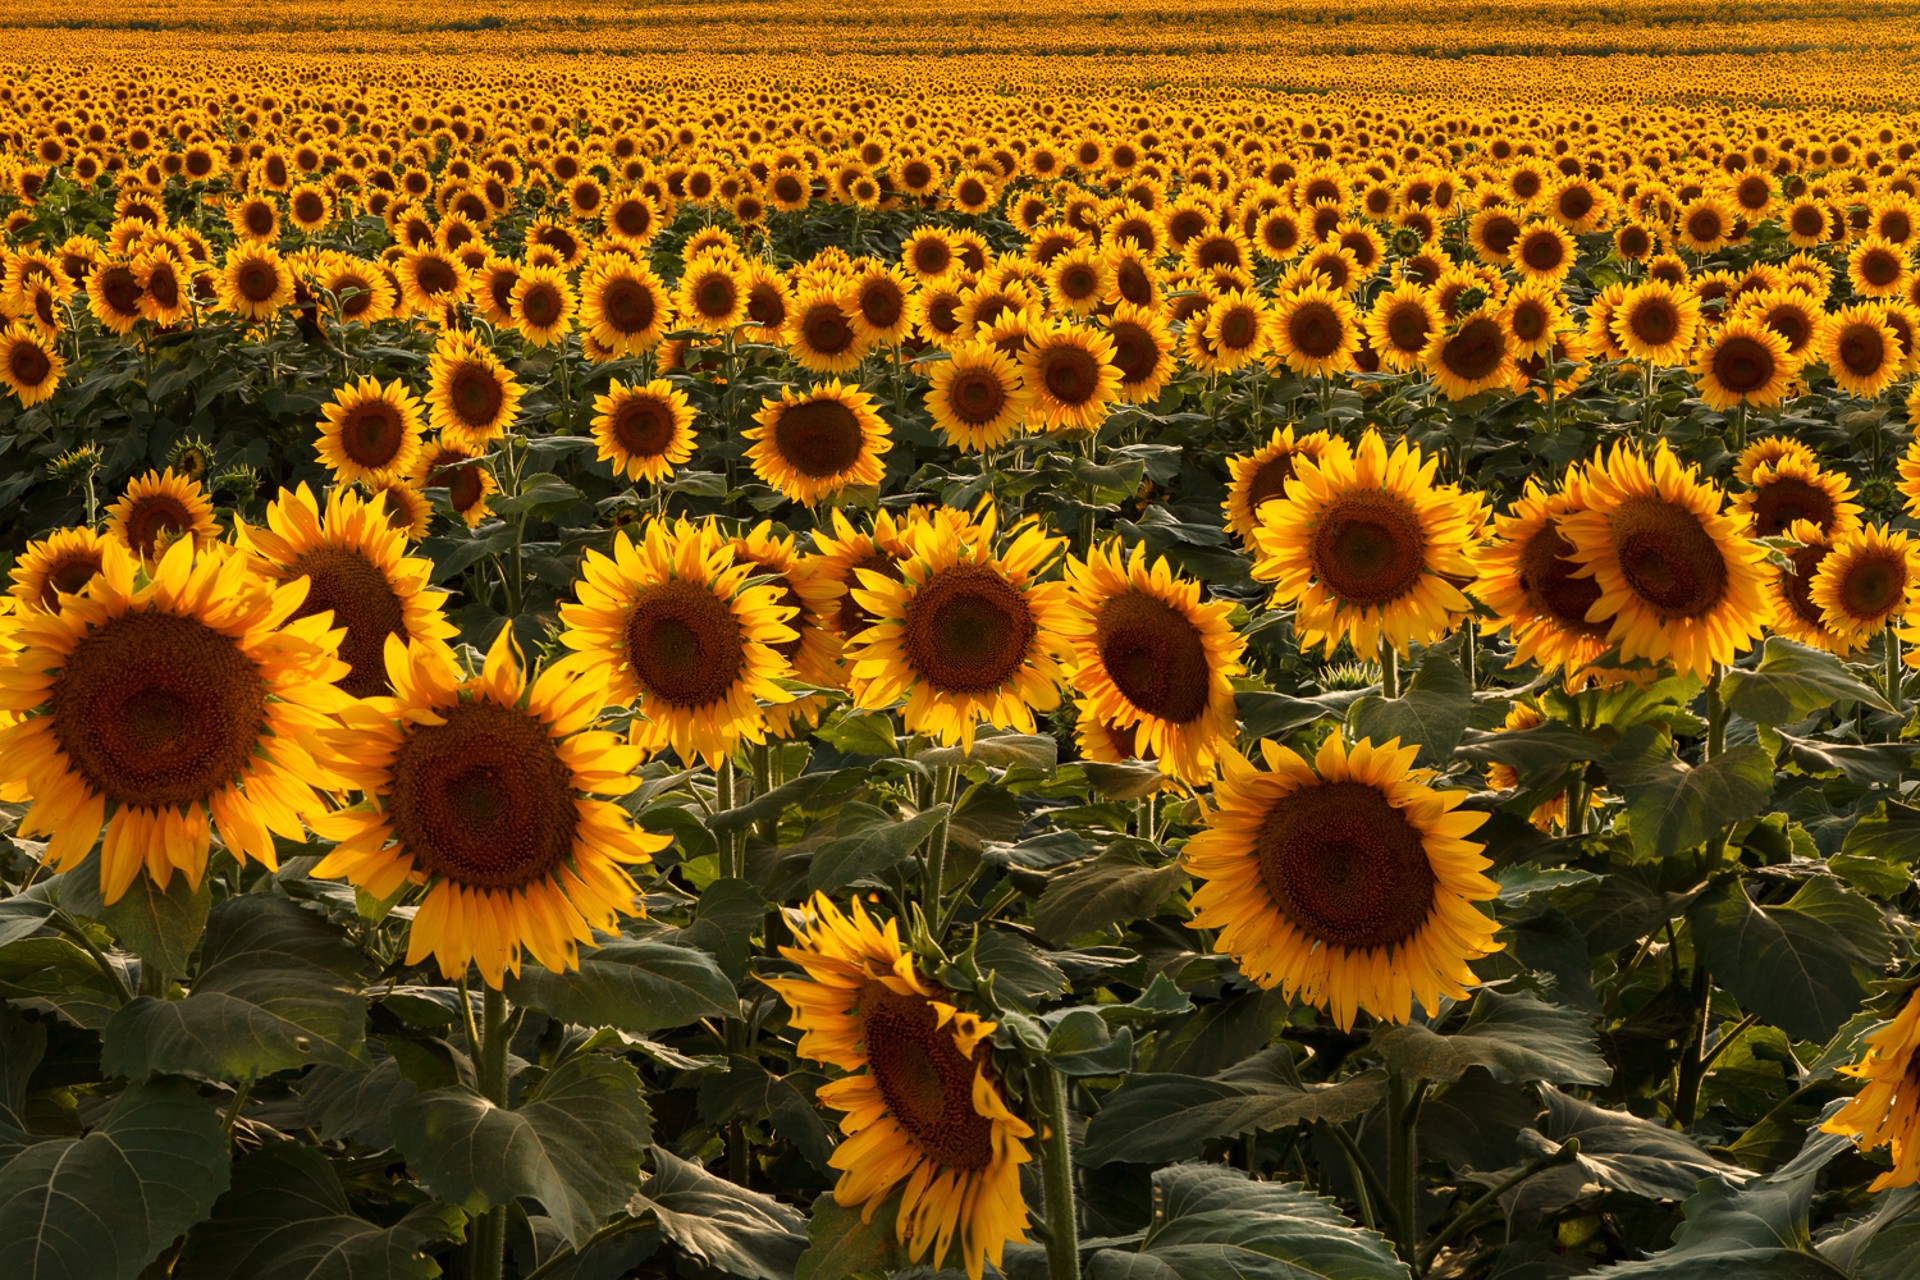 Just Sunflowers by Scott Bean